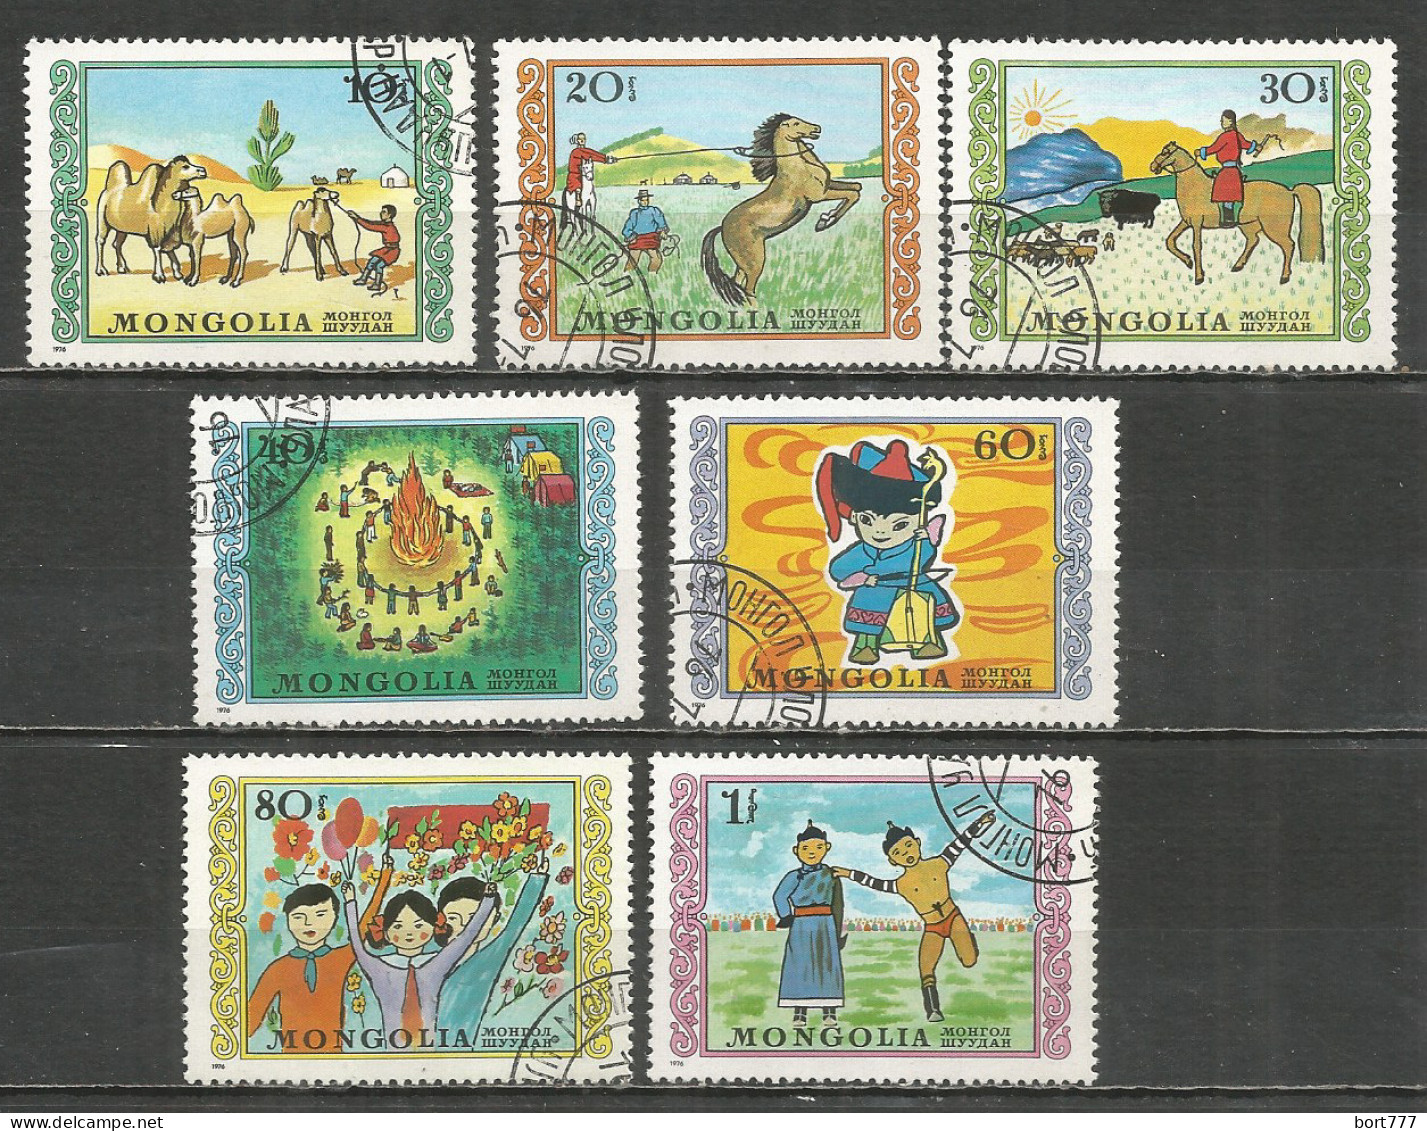 Mongolia 1976 Used Stamps CTO  - Mongolia